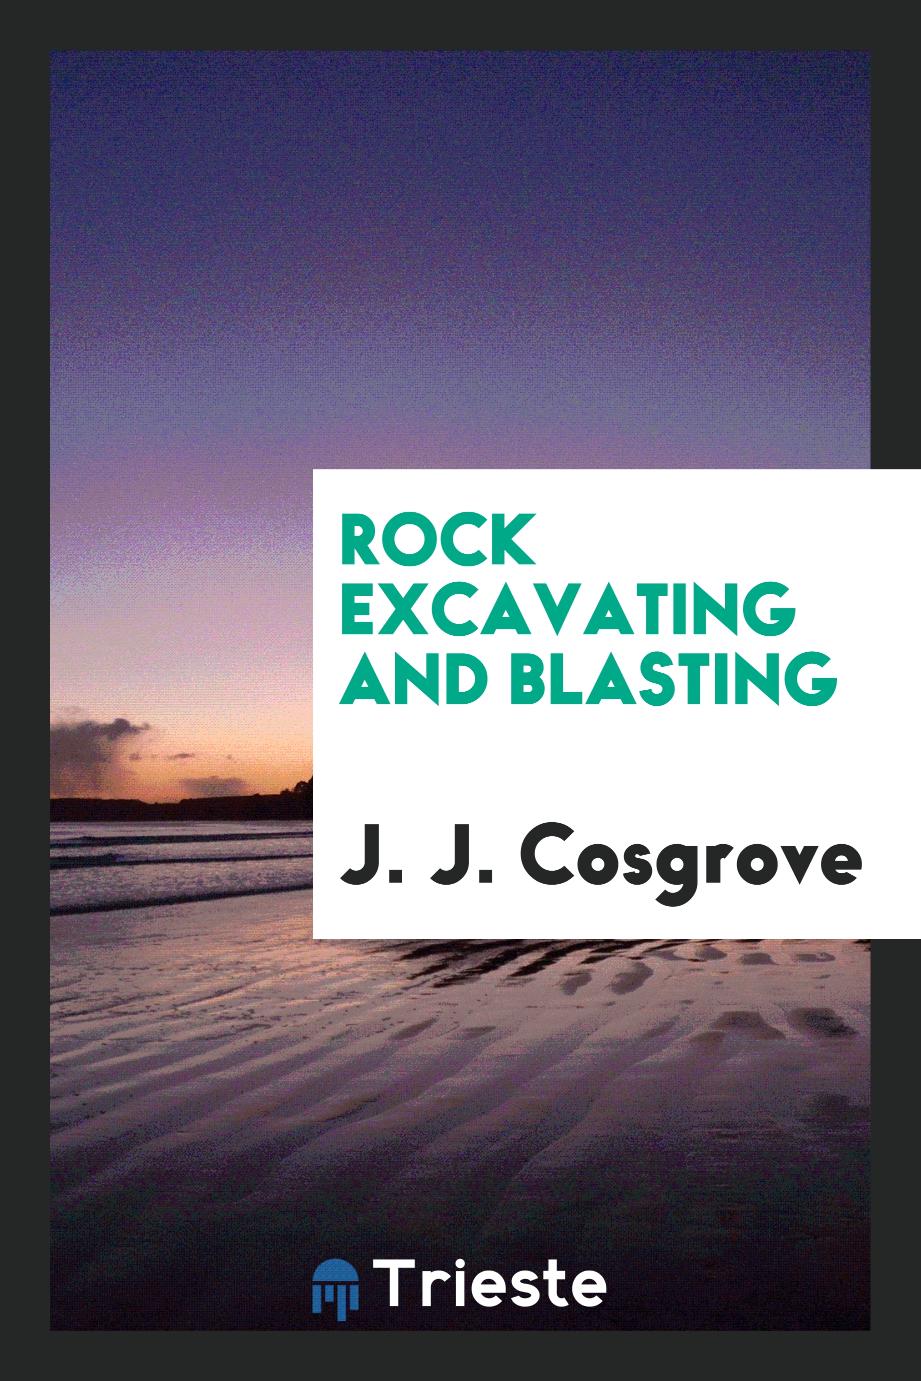 Rock excavating and blasting